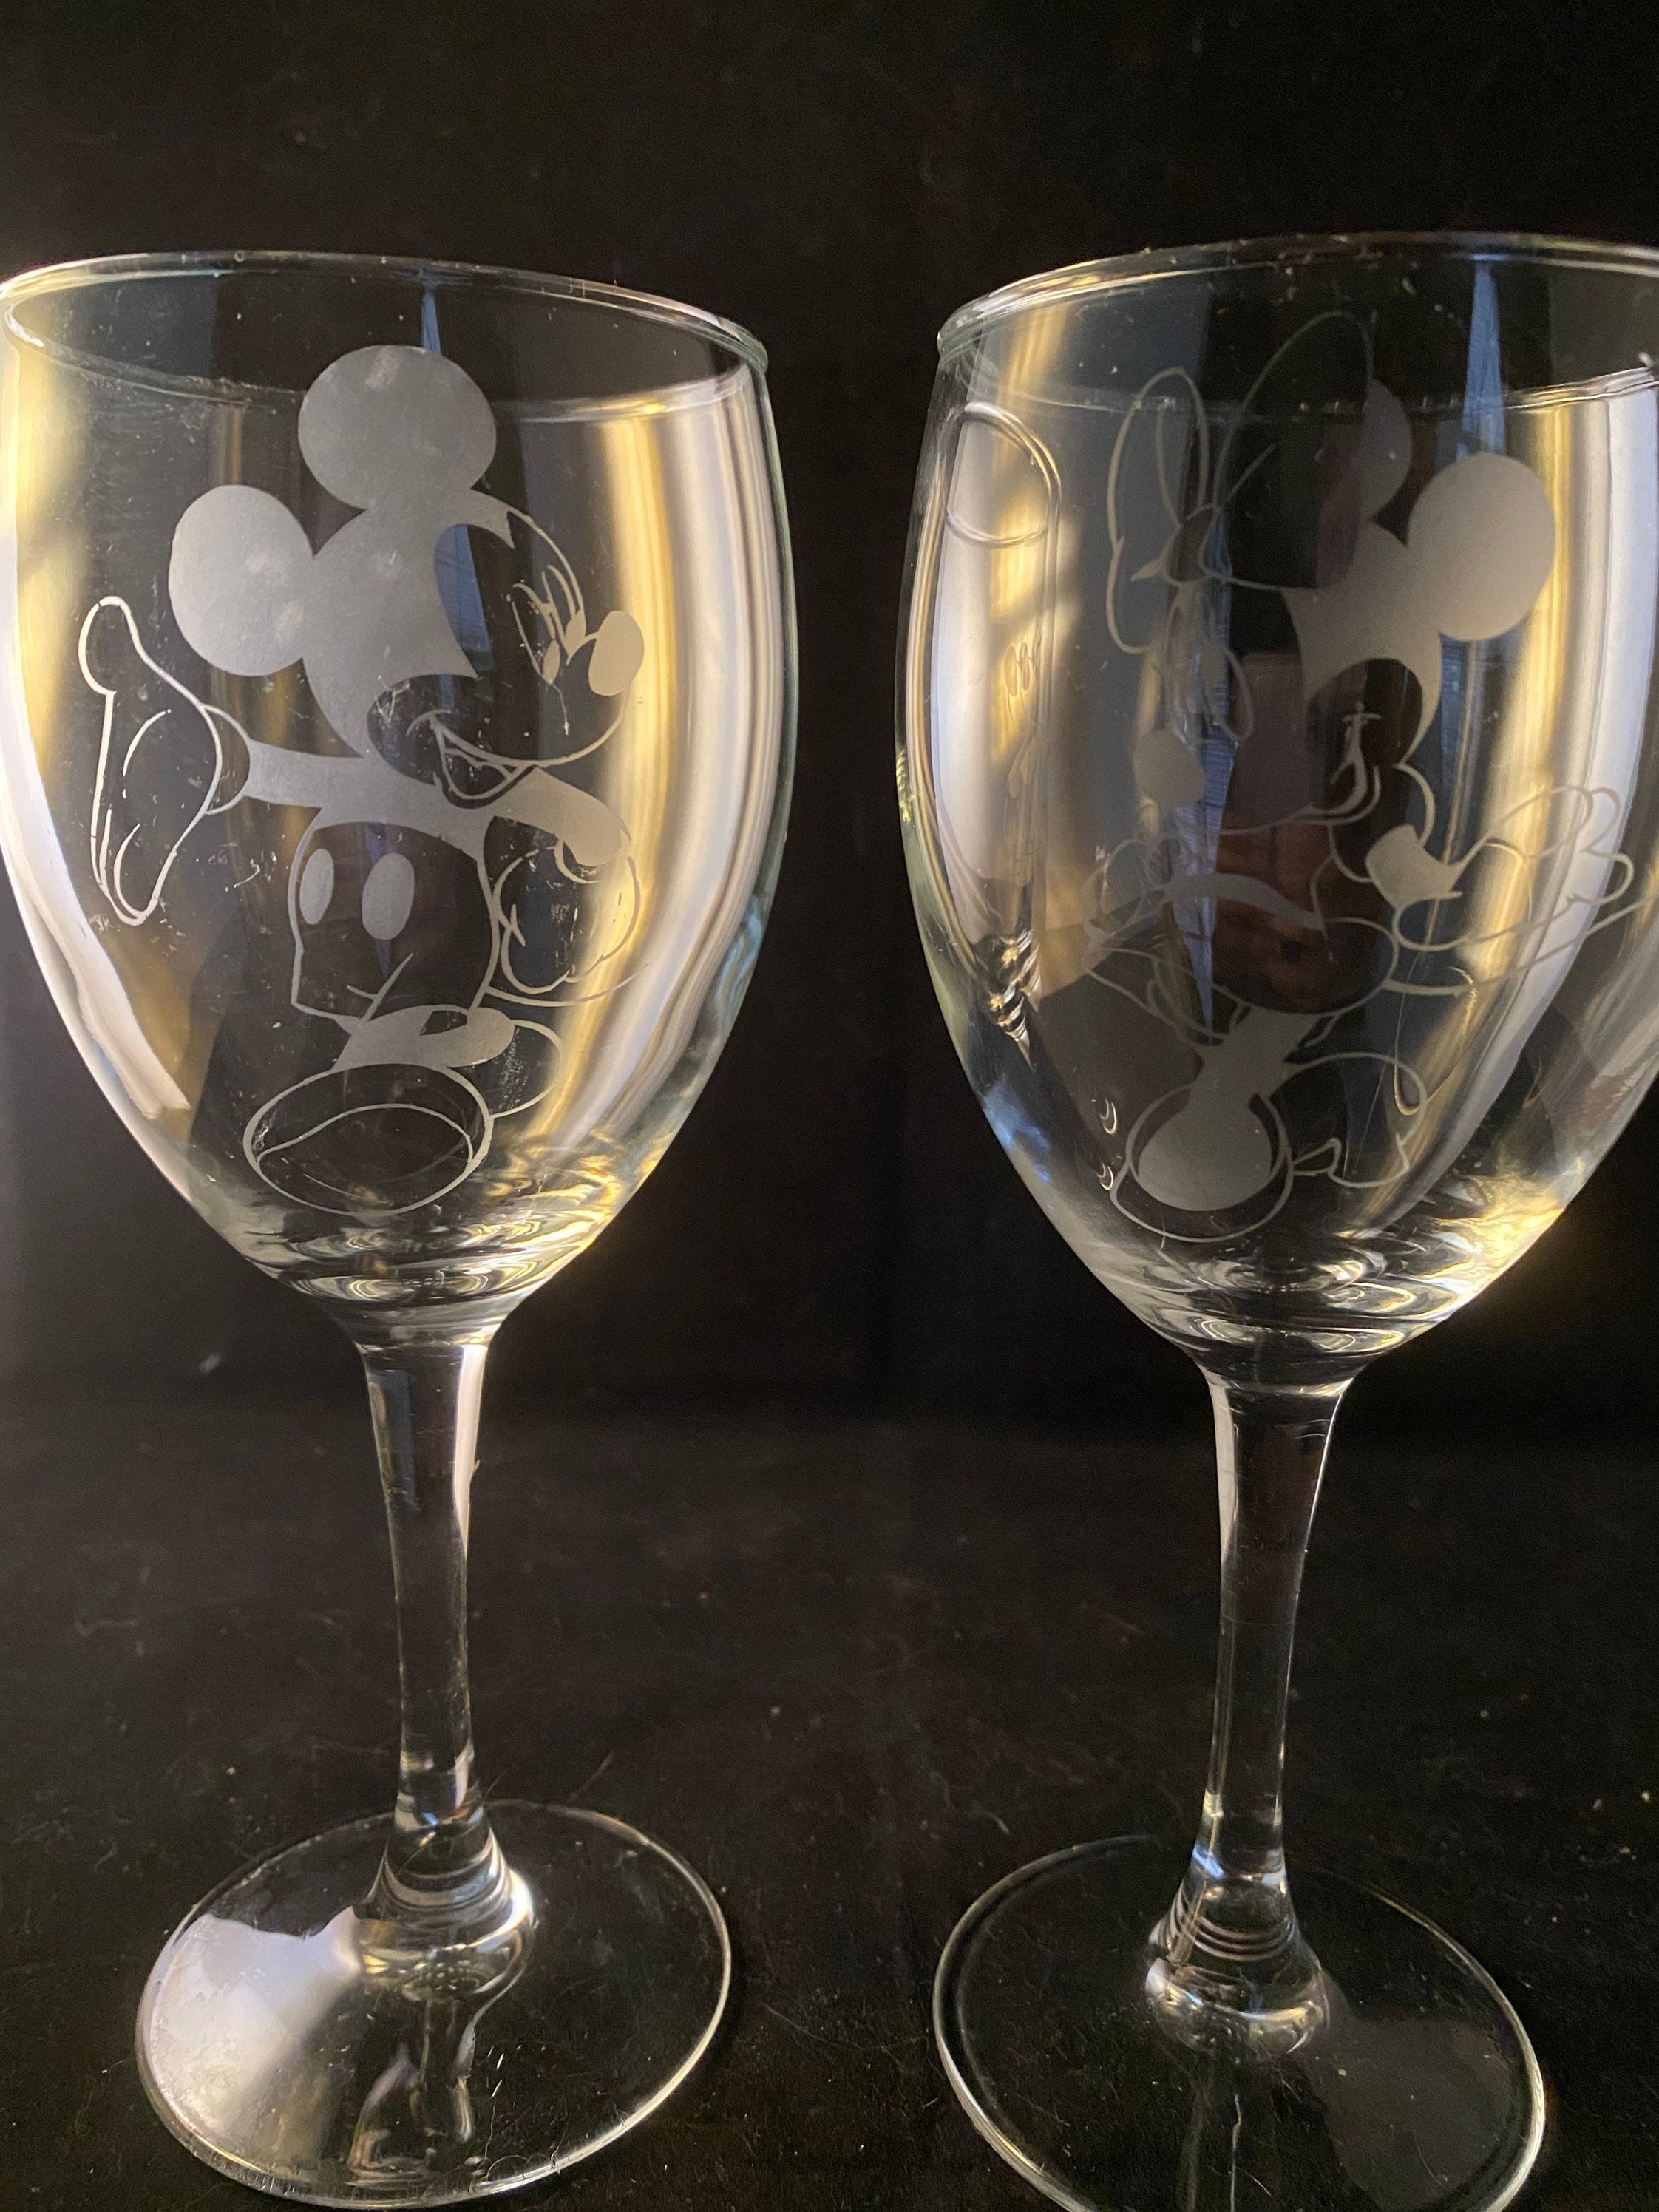 Disney Wine Glass - Mickey Mouse Icons - Black-KitGlass-2816